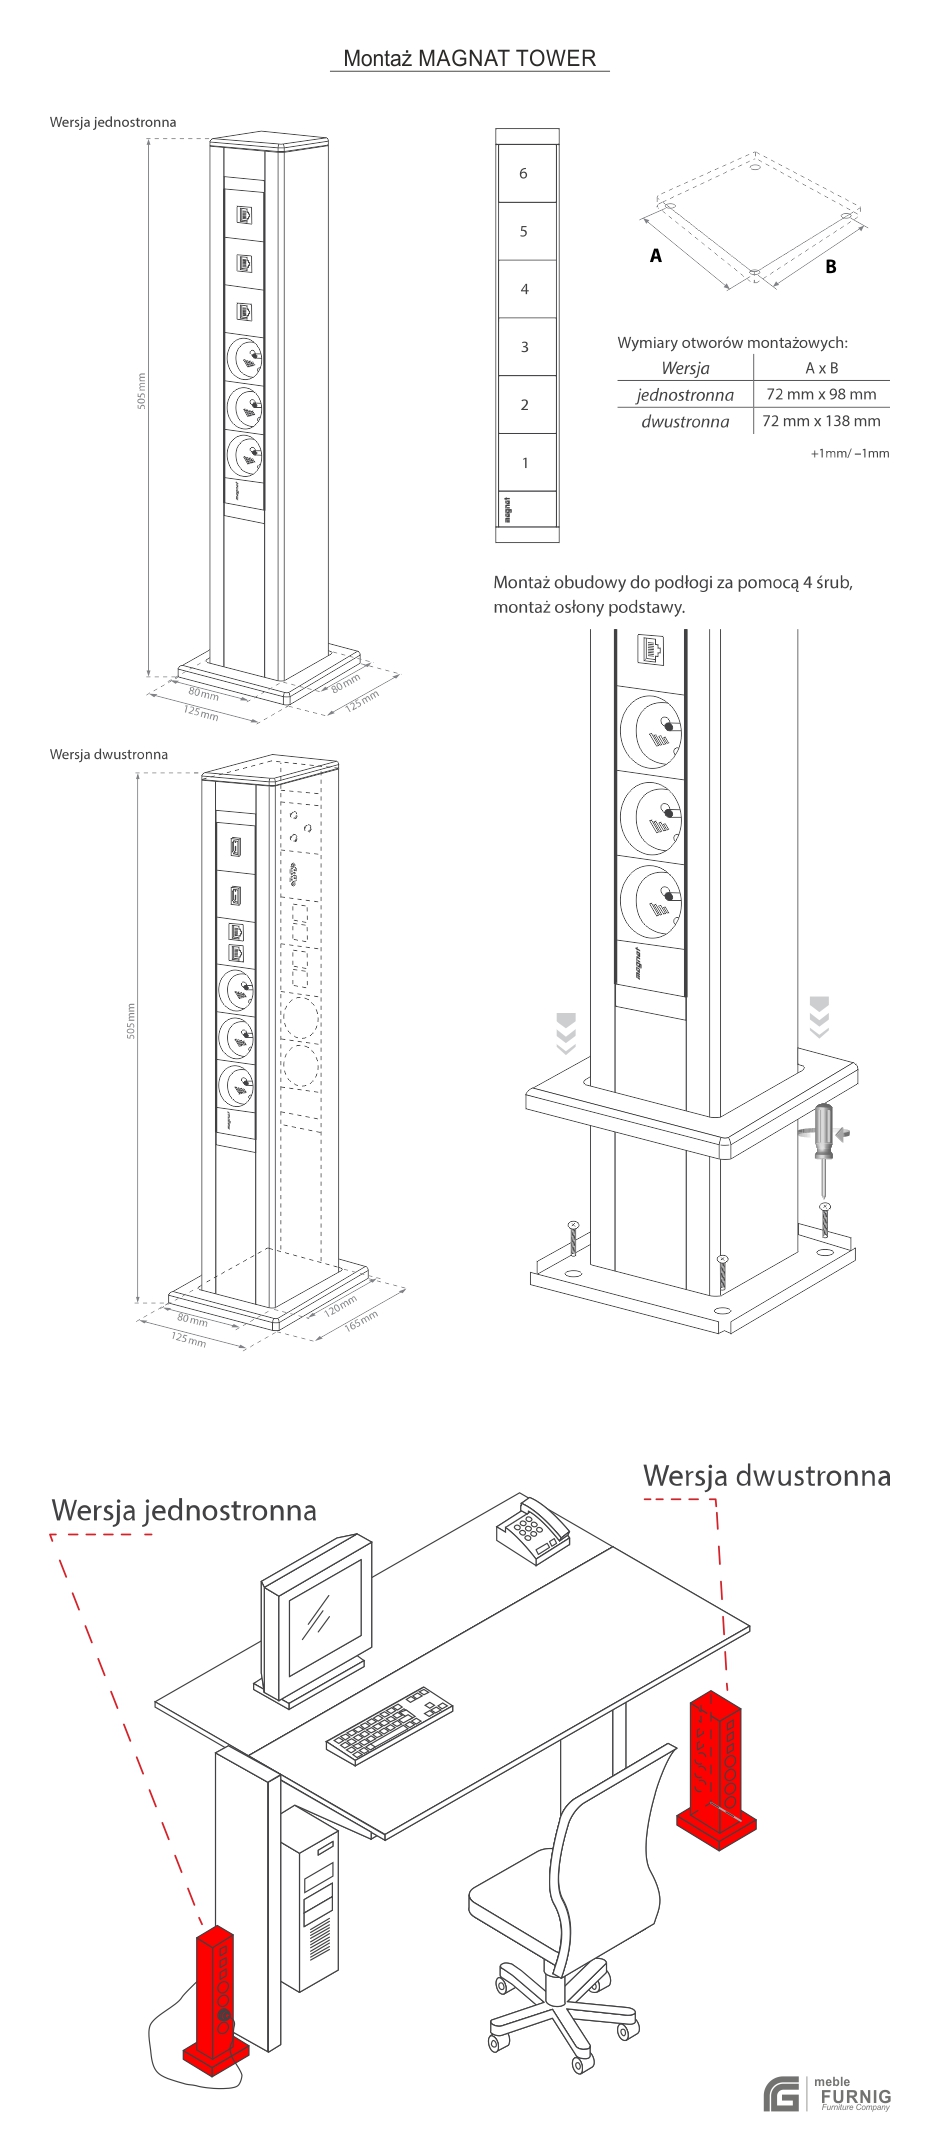 Instrukcja montażu Magnat Tower